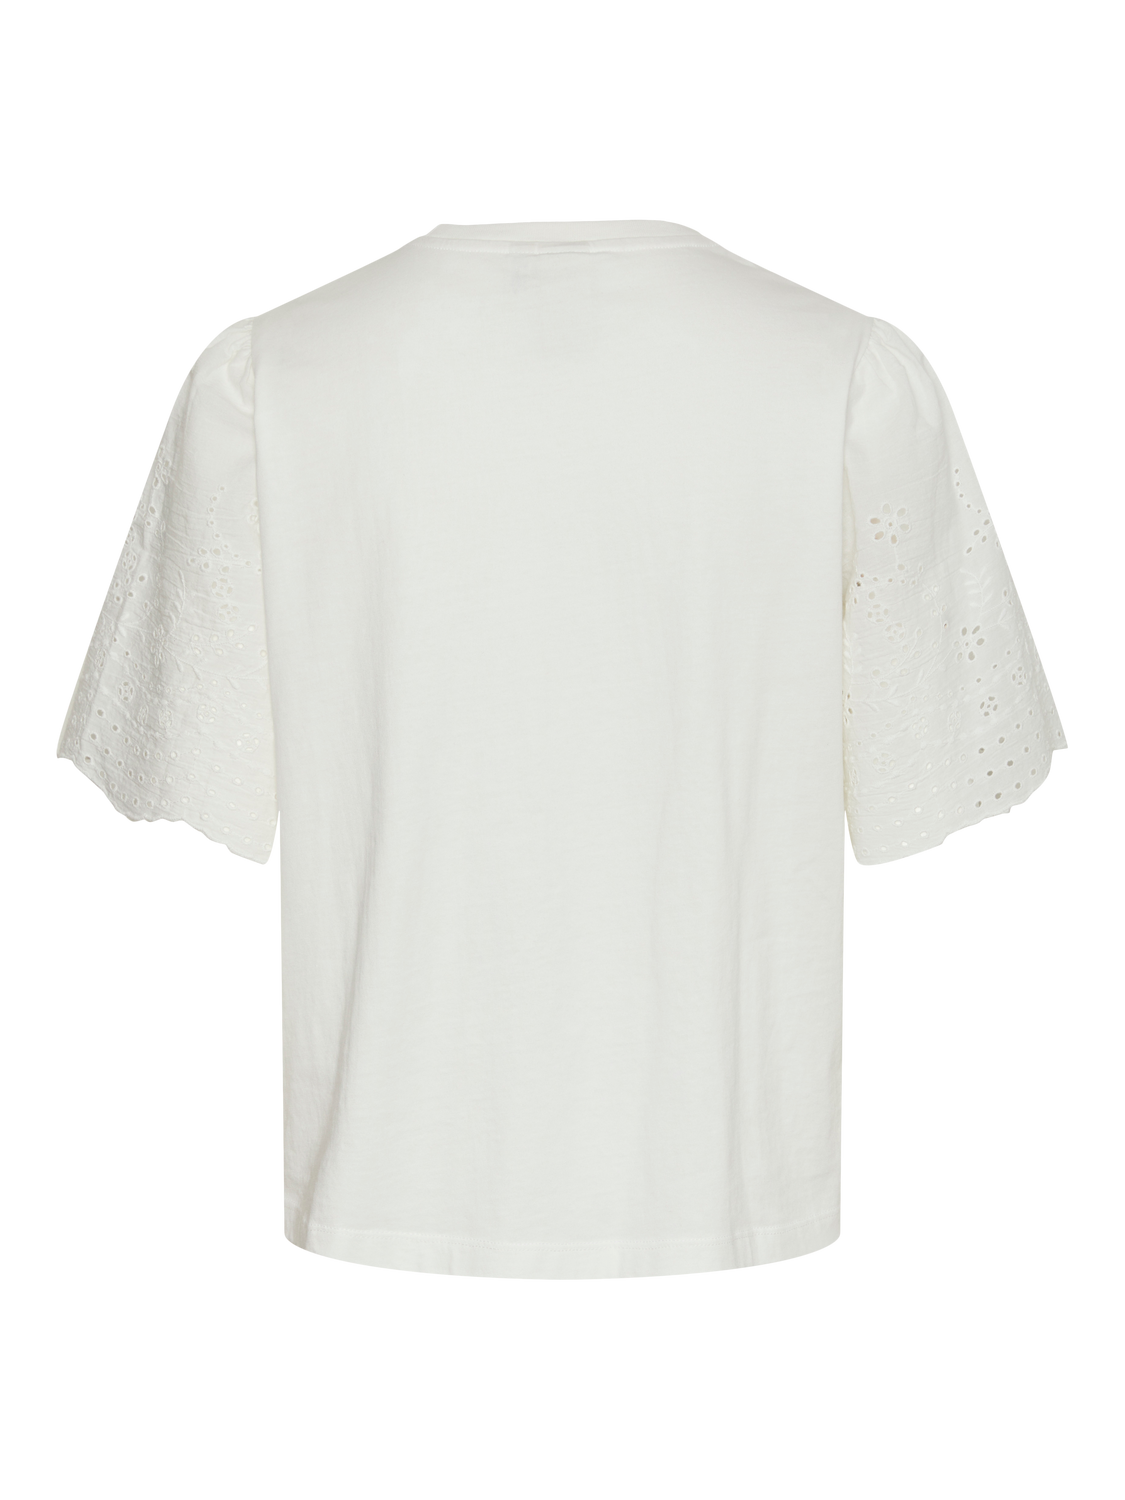 YASLEX T-Shirt Top - Star White